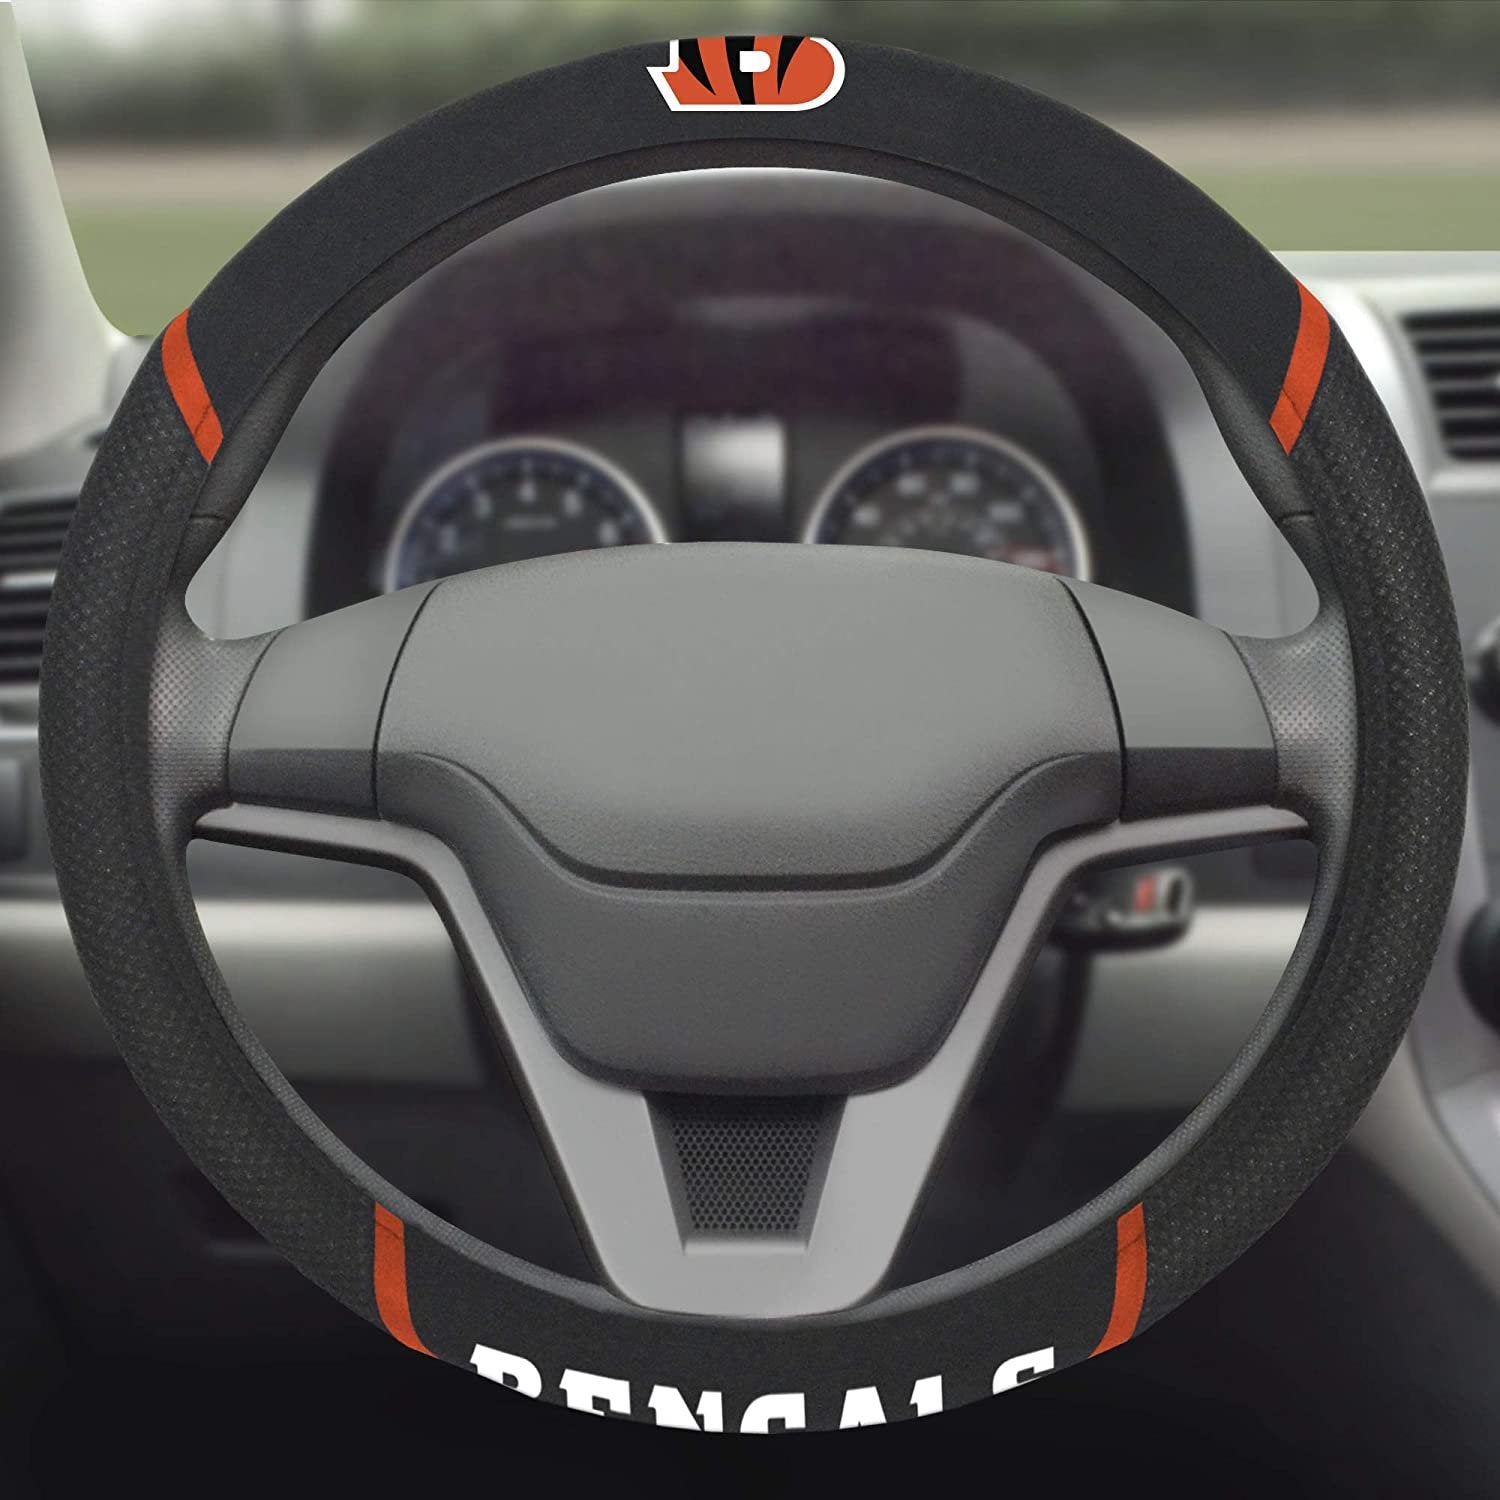 Cincinnati Bengals Steering Wheel Cover Premium Embroidered Black 15 Inch